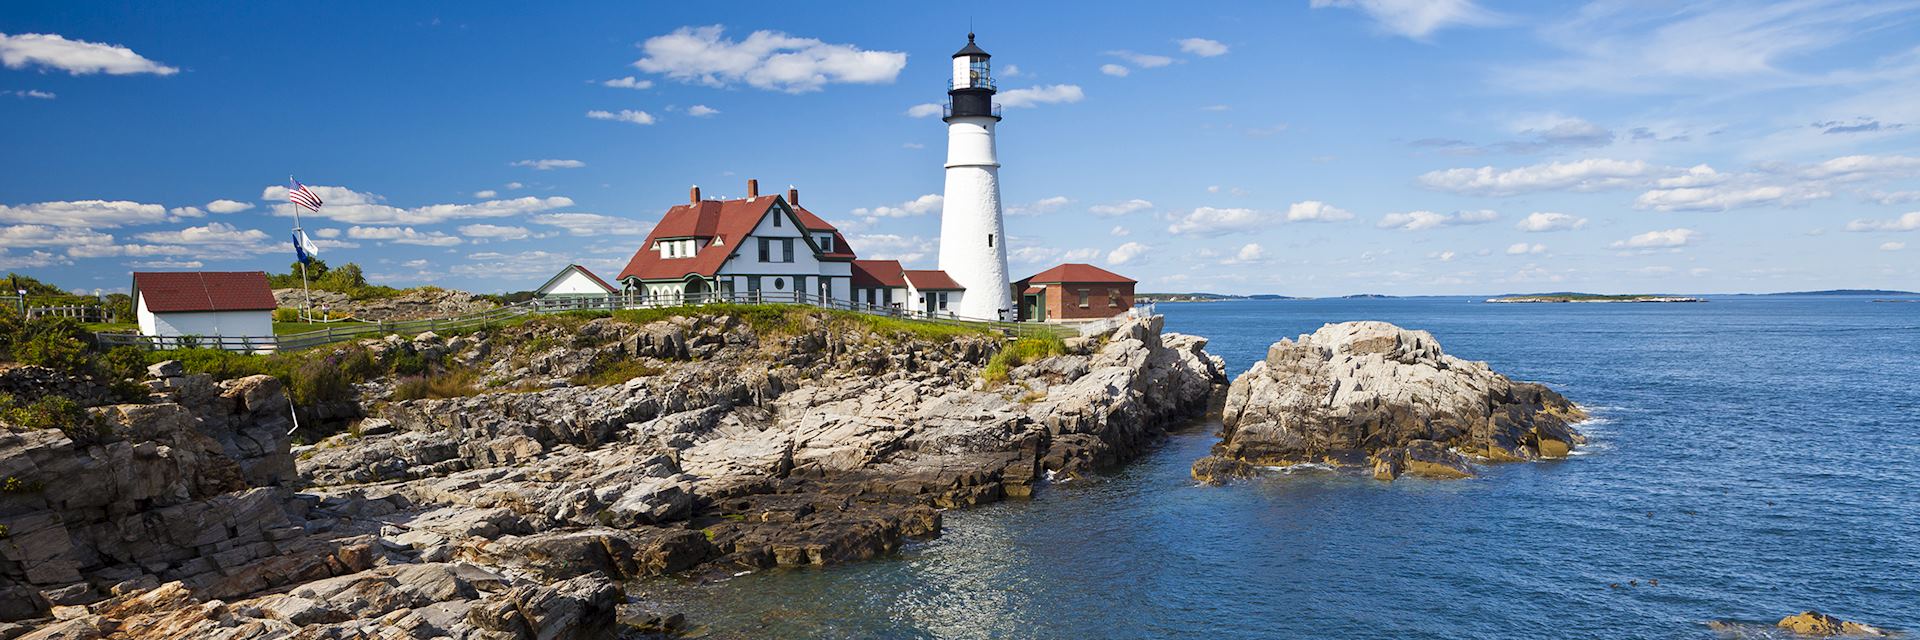 Portland Head Lighthouse In Maine, USA 